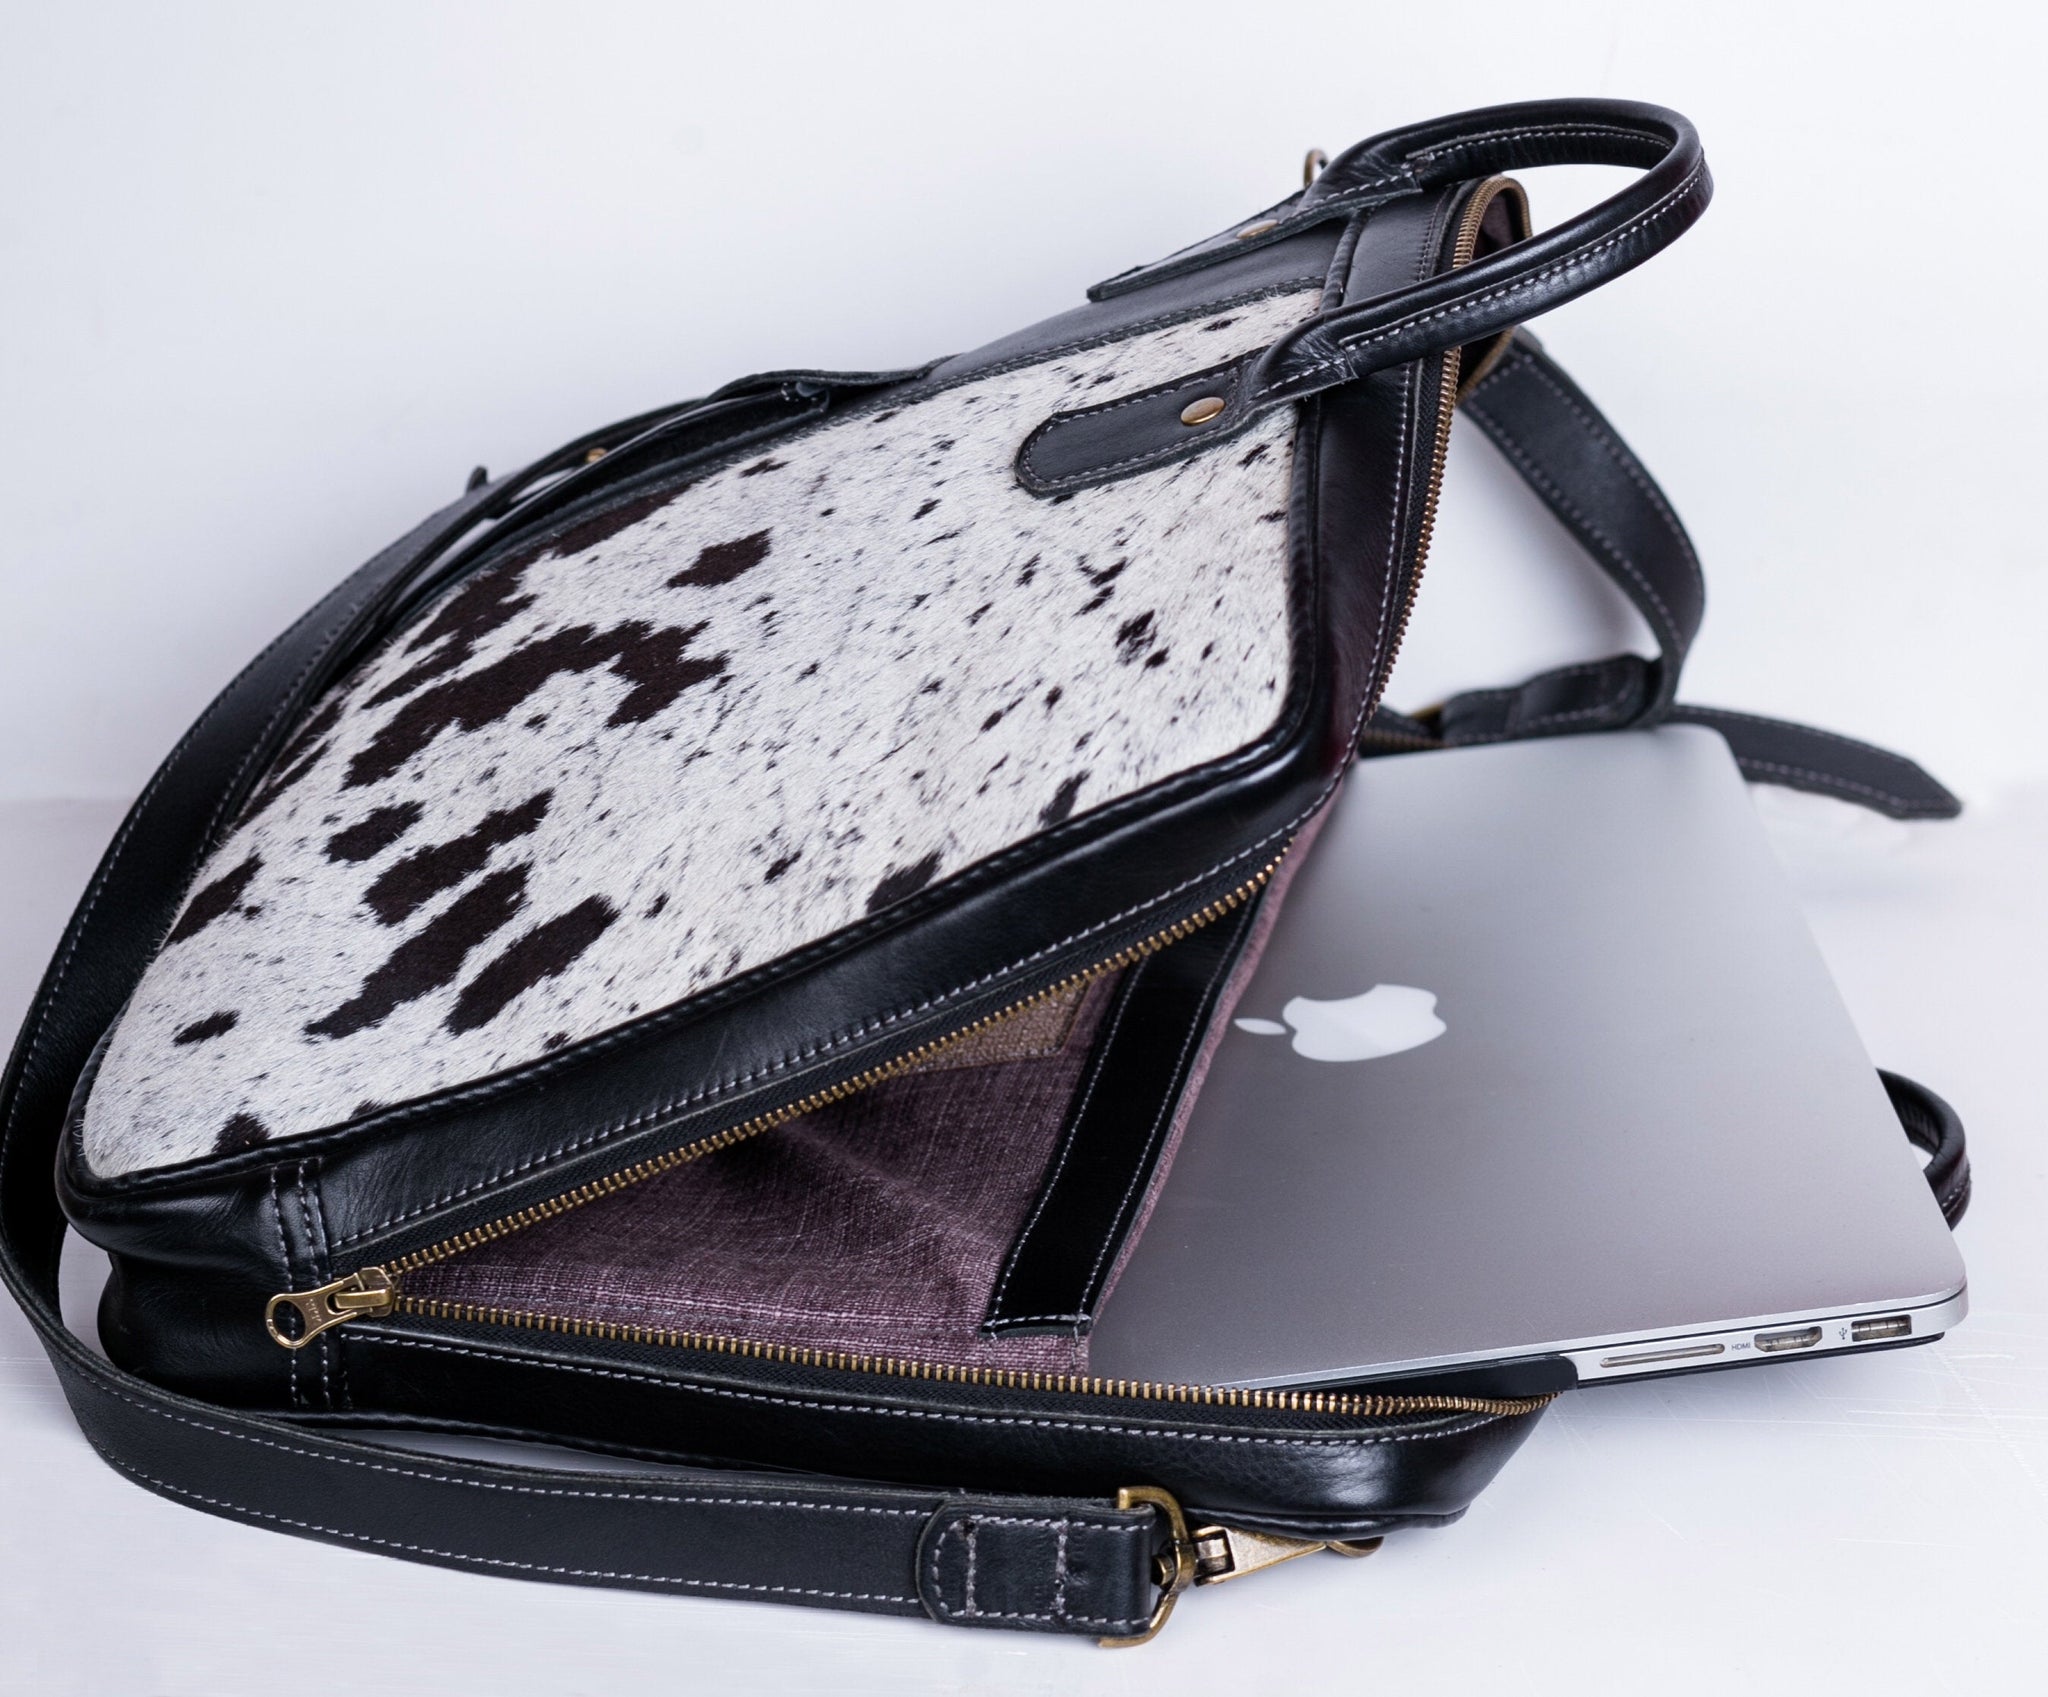 BOSTANTEN Briefcase for Women 15.6 inch Leather Laptop Bag Vintage Sli